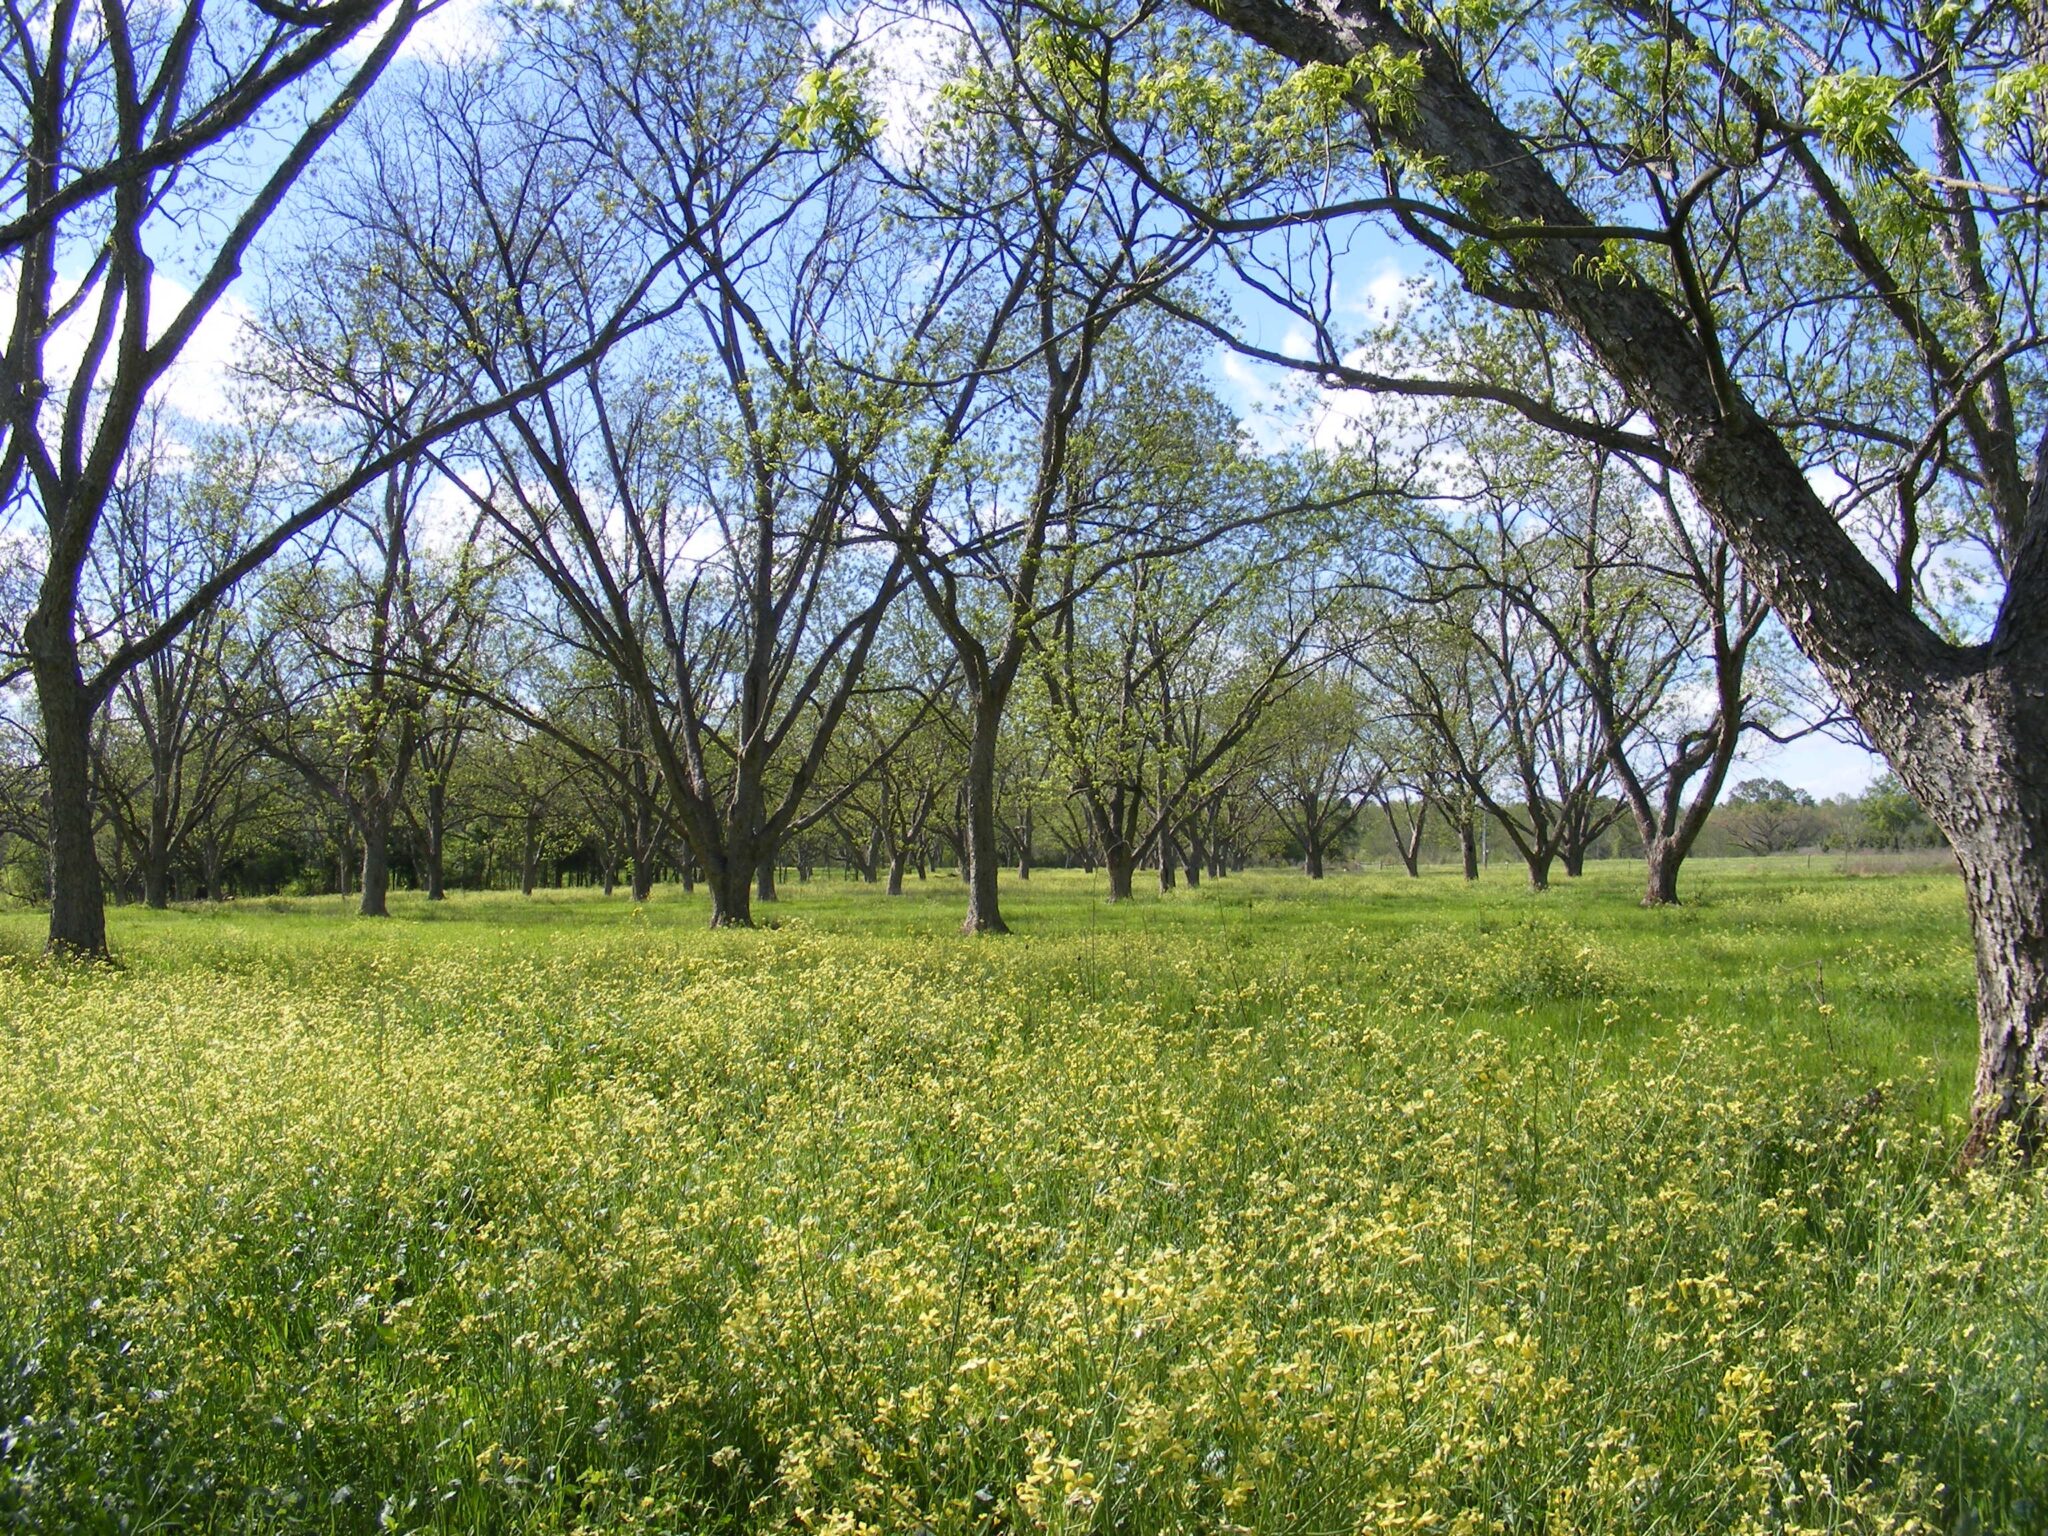 Green grass, yellow flowers, blue sky, pecan trees